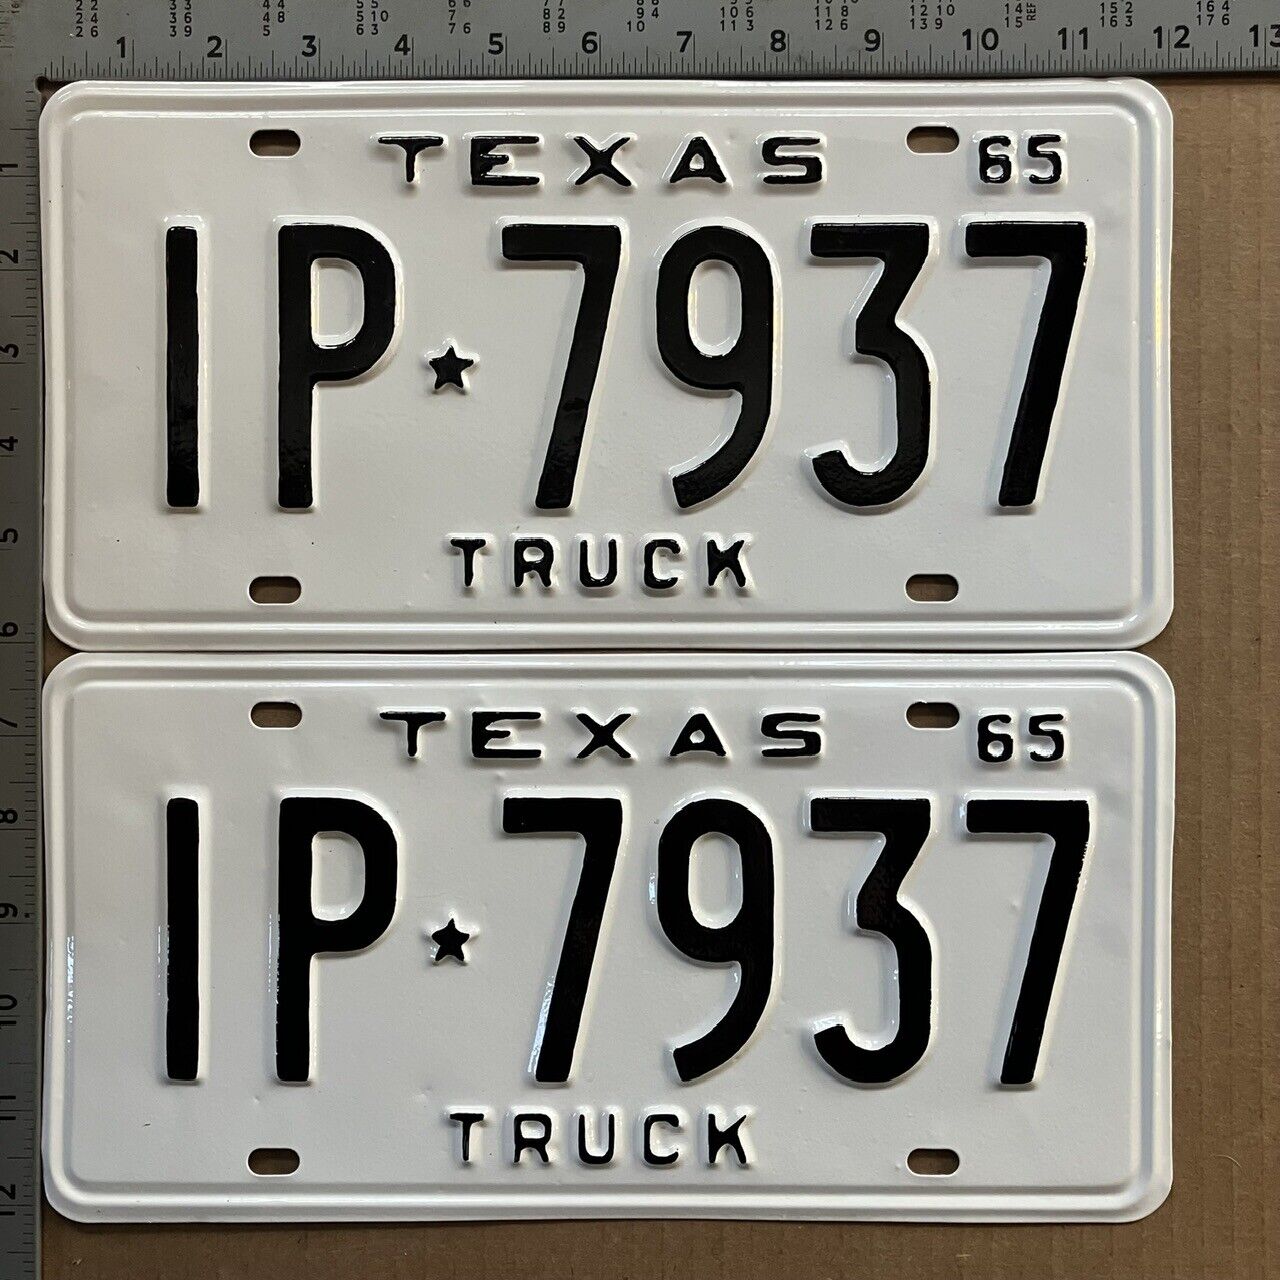 1965 Texas truck license plate pair 1P 7937 YOM DMV bright white SHOW TIME 13025